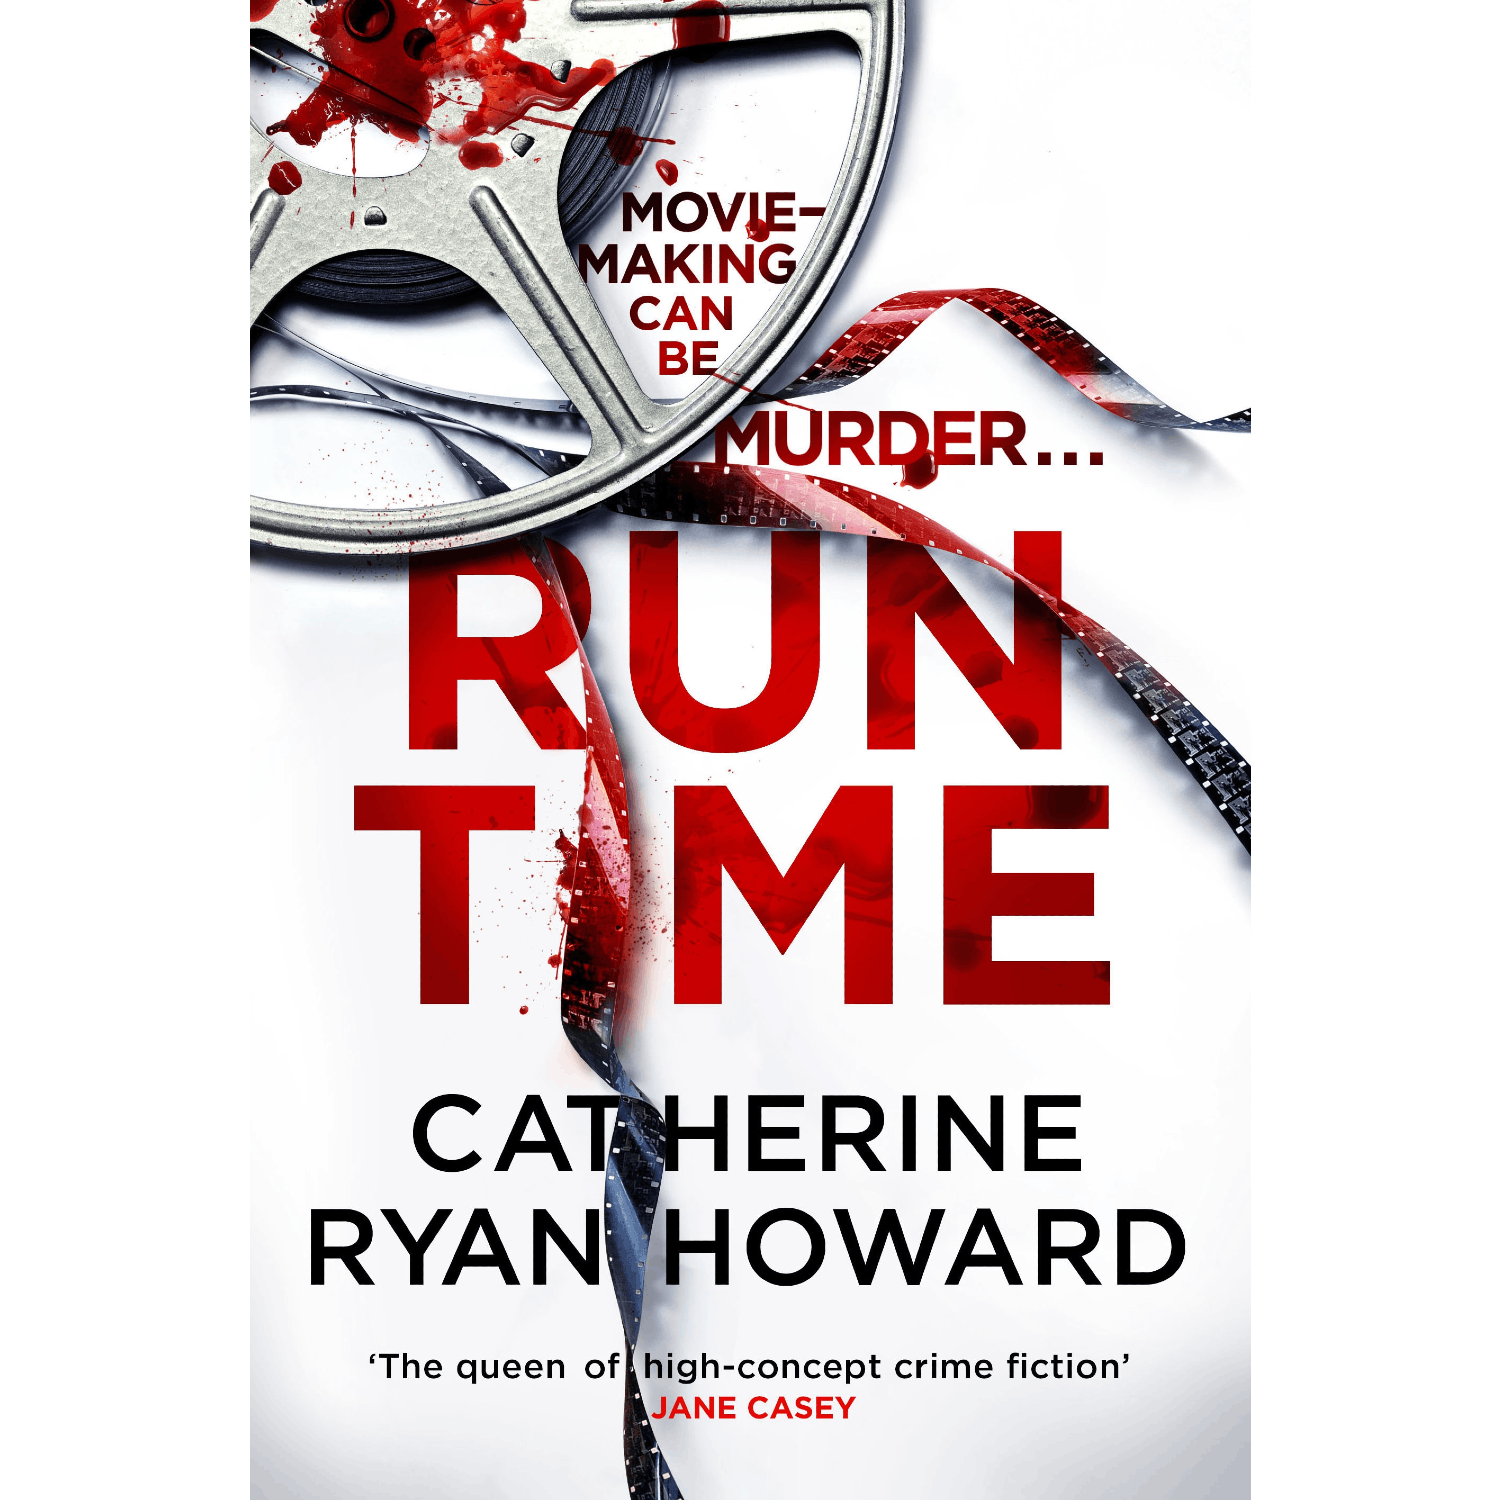 Bestselling Author Catherine Ryan Howard